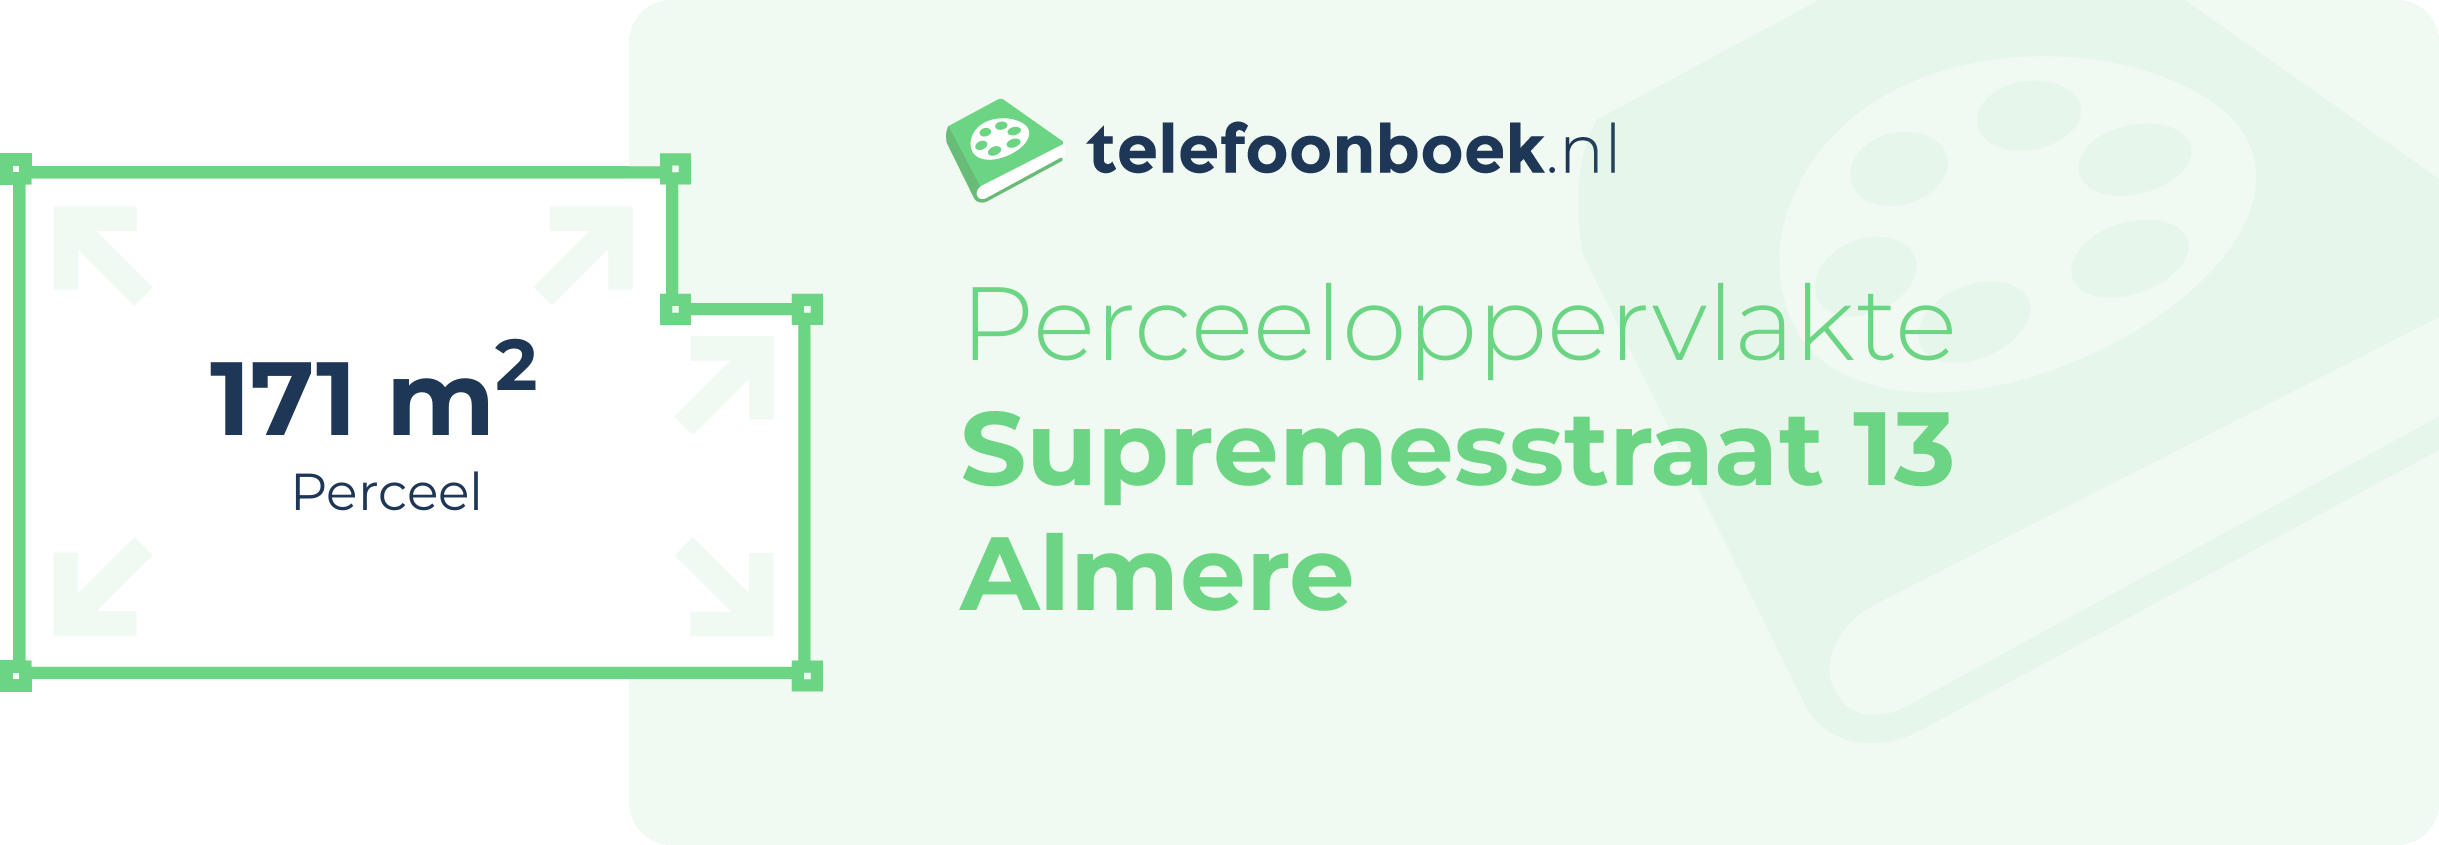 Perceeloppervlakte Supremesstraat 13 Almere